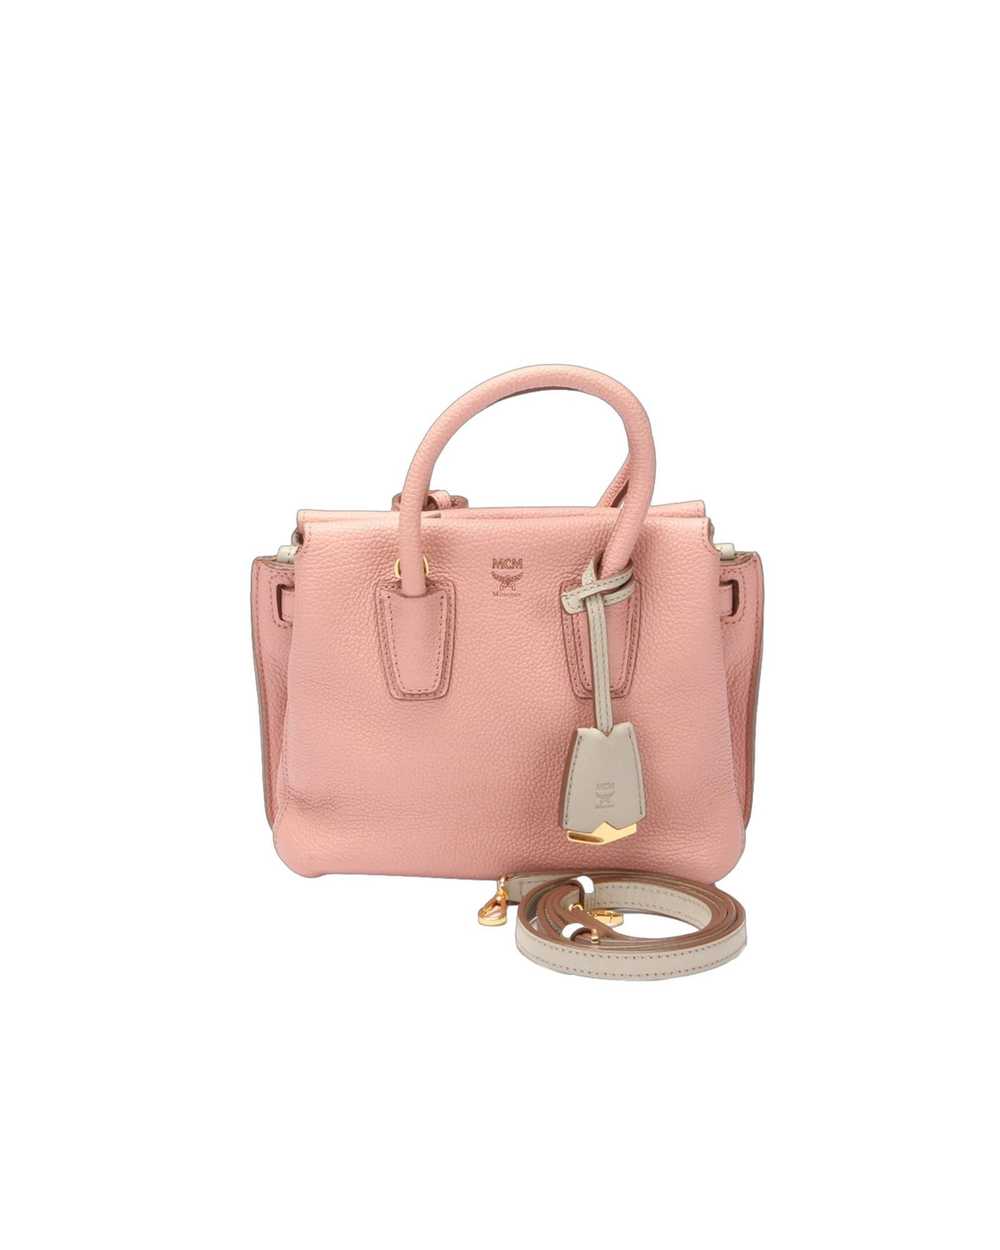 MCM Lightly Worn Pink Mini Tote Bag - image 2